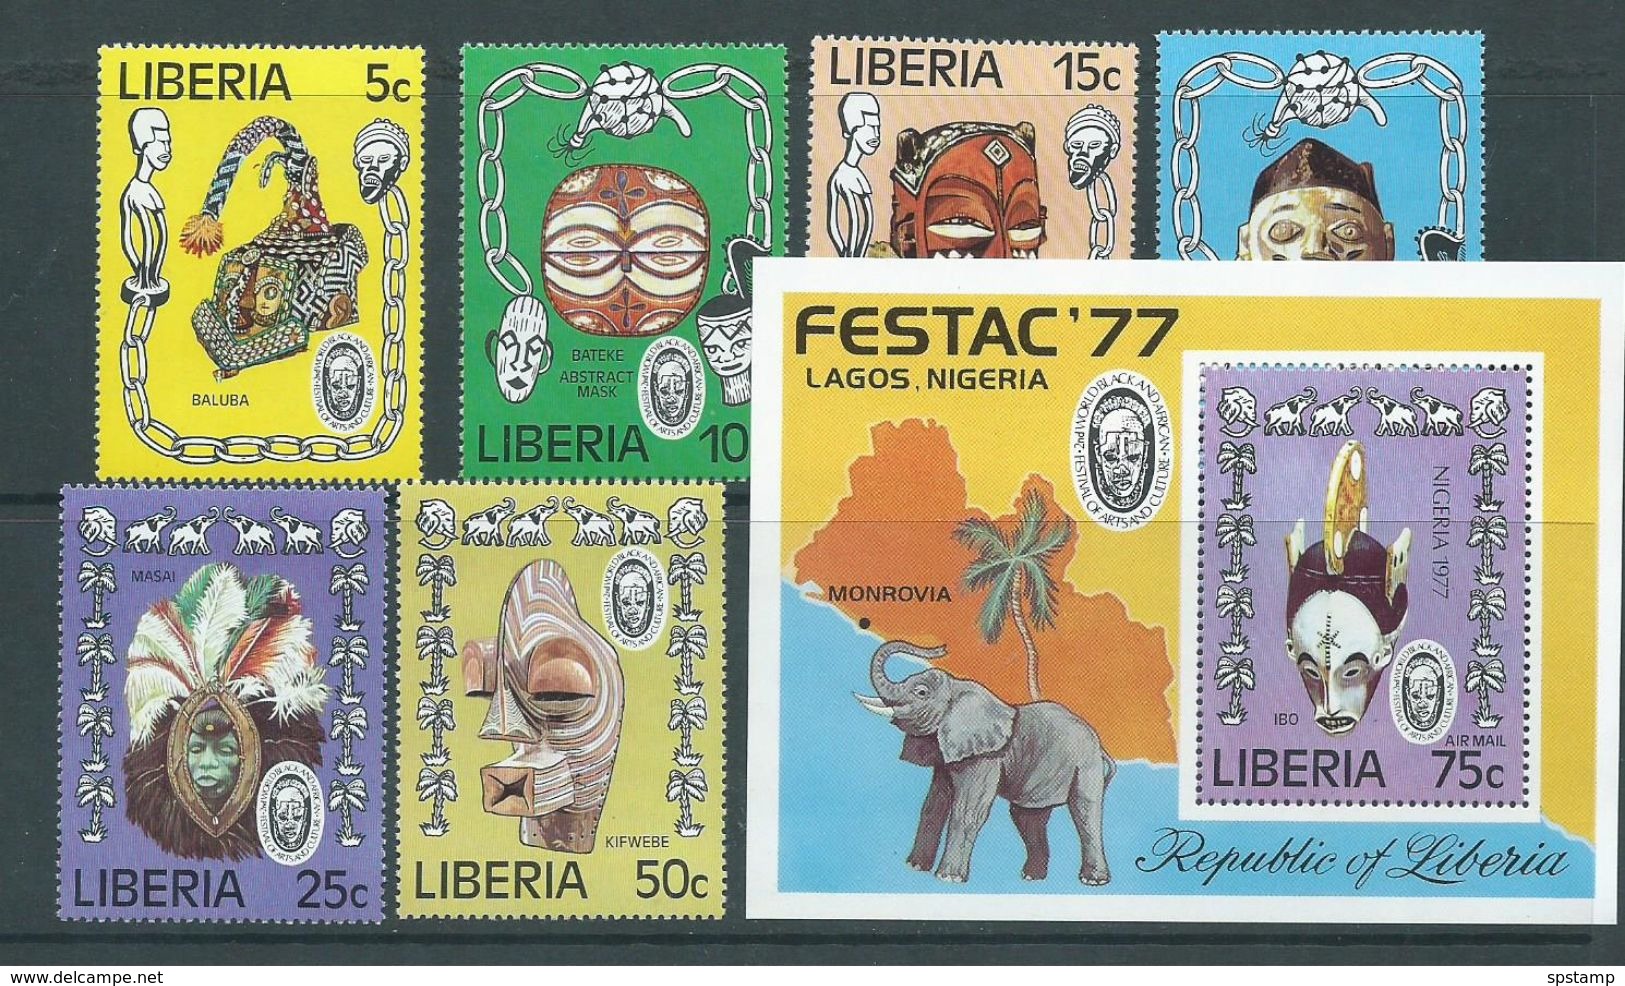 Liberia 1976 Festac Festival Nigeria Set 6 & Miniature Sheet MNH - Liberia